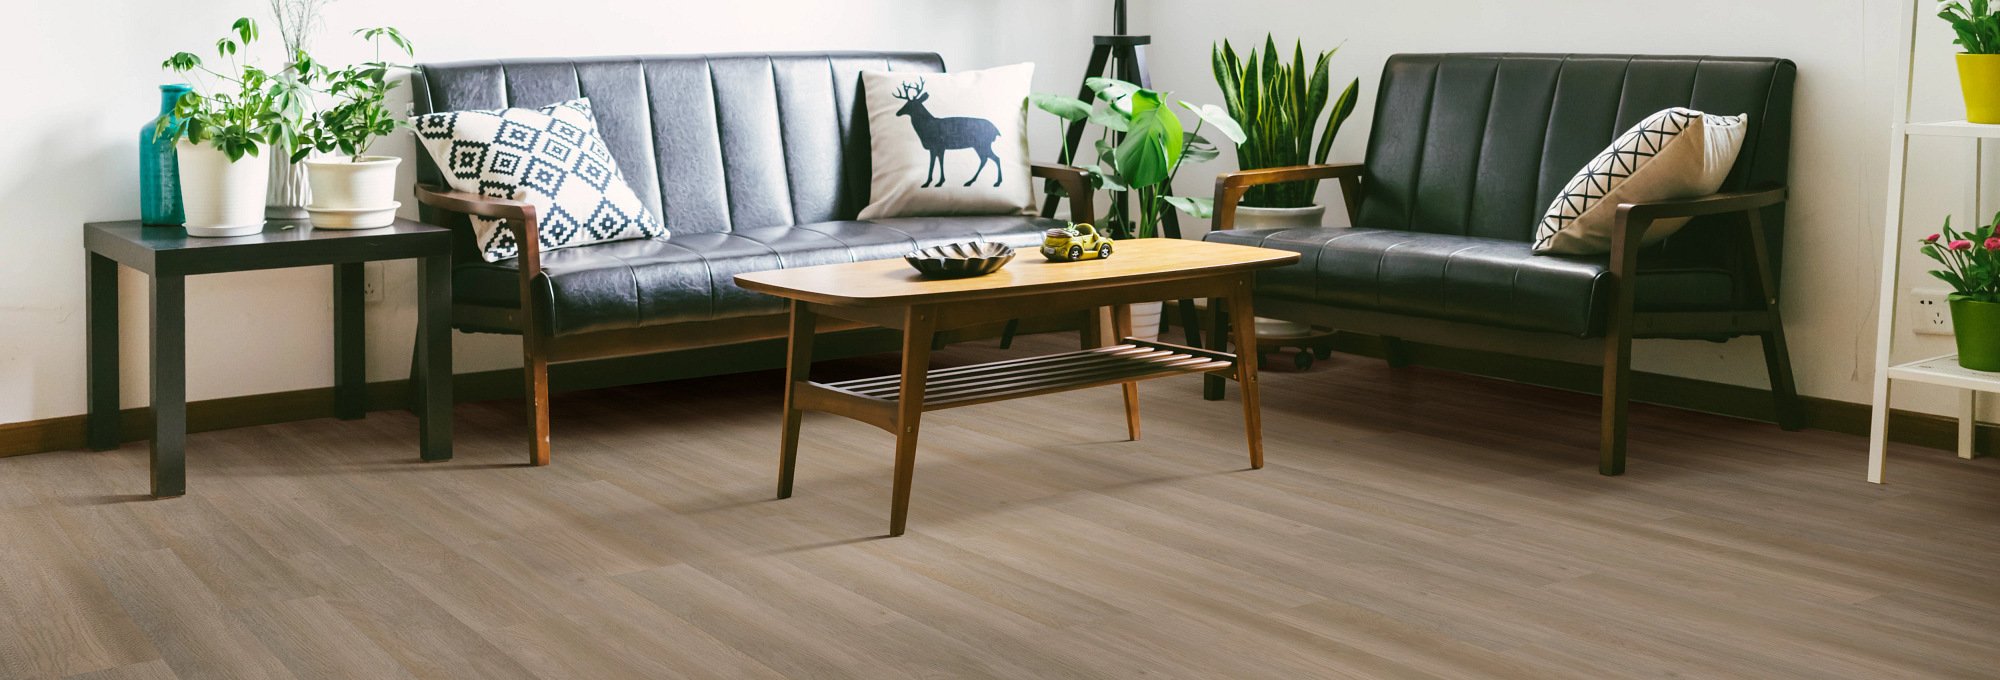 Living room with wood-look luxury vinyl flooring from Scott's Flooring in Barrie, ON